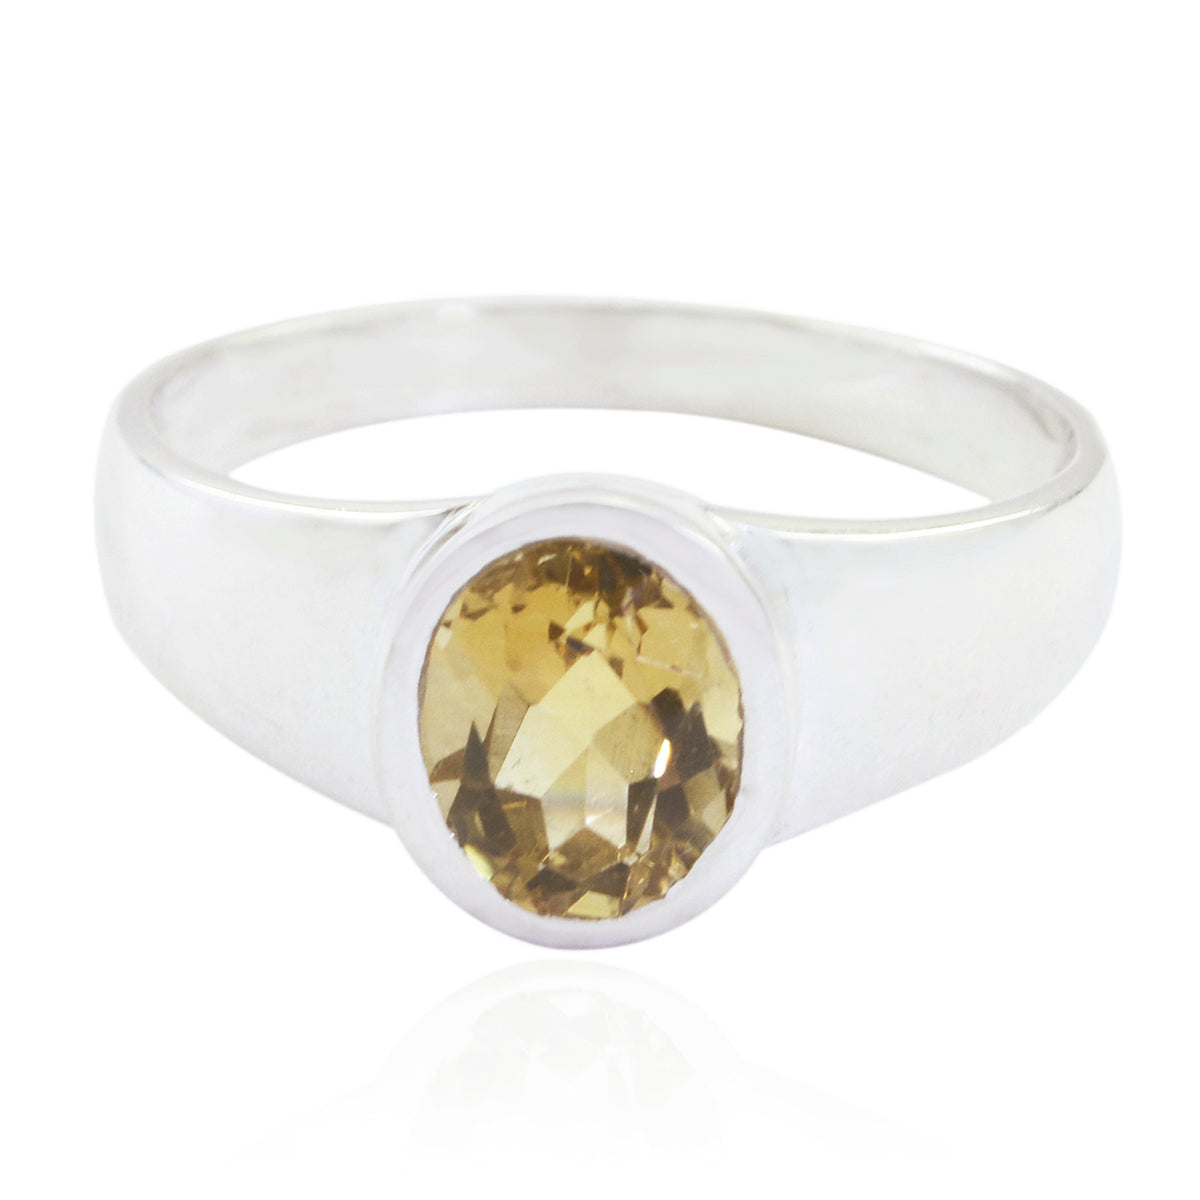 Riyo Exquisite Gemstones Citrine Silver Ring Selling Gold Jewelry